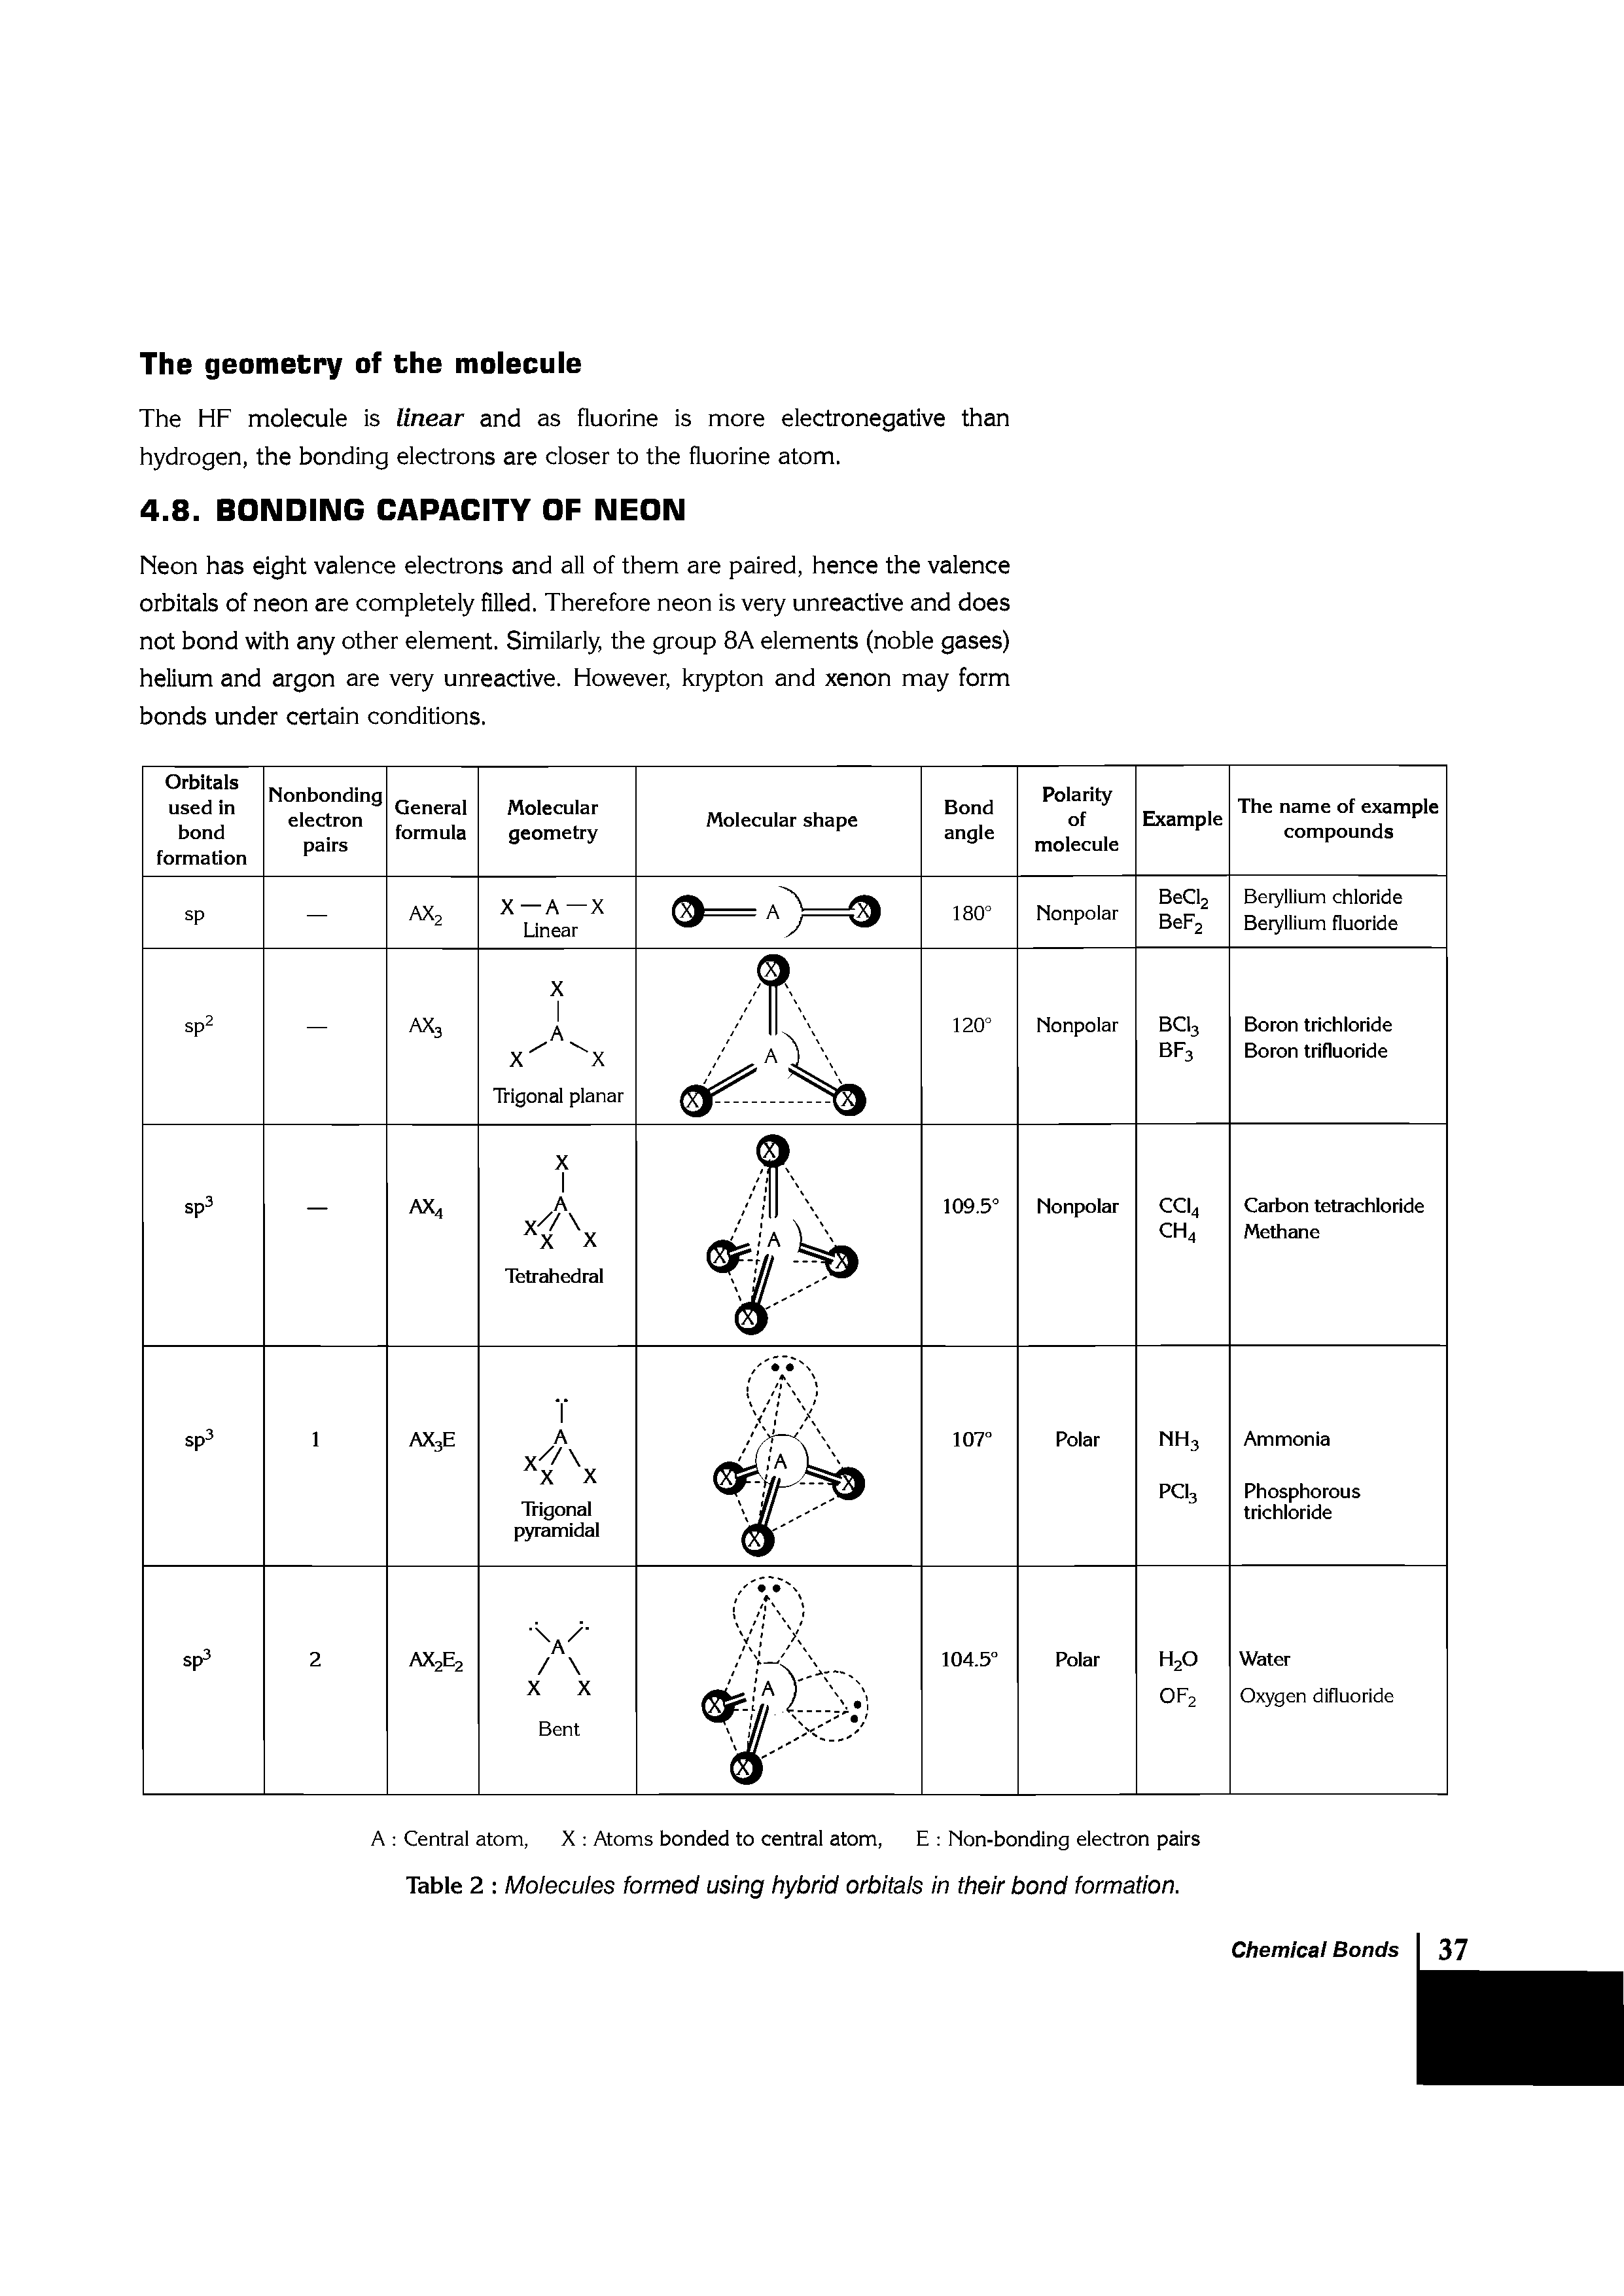 Table 2 Molecules formed using hybrid orbitals in their bond formation.